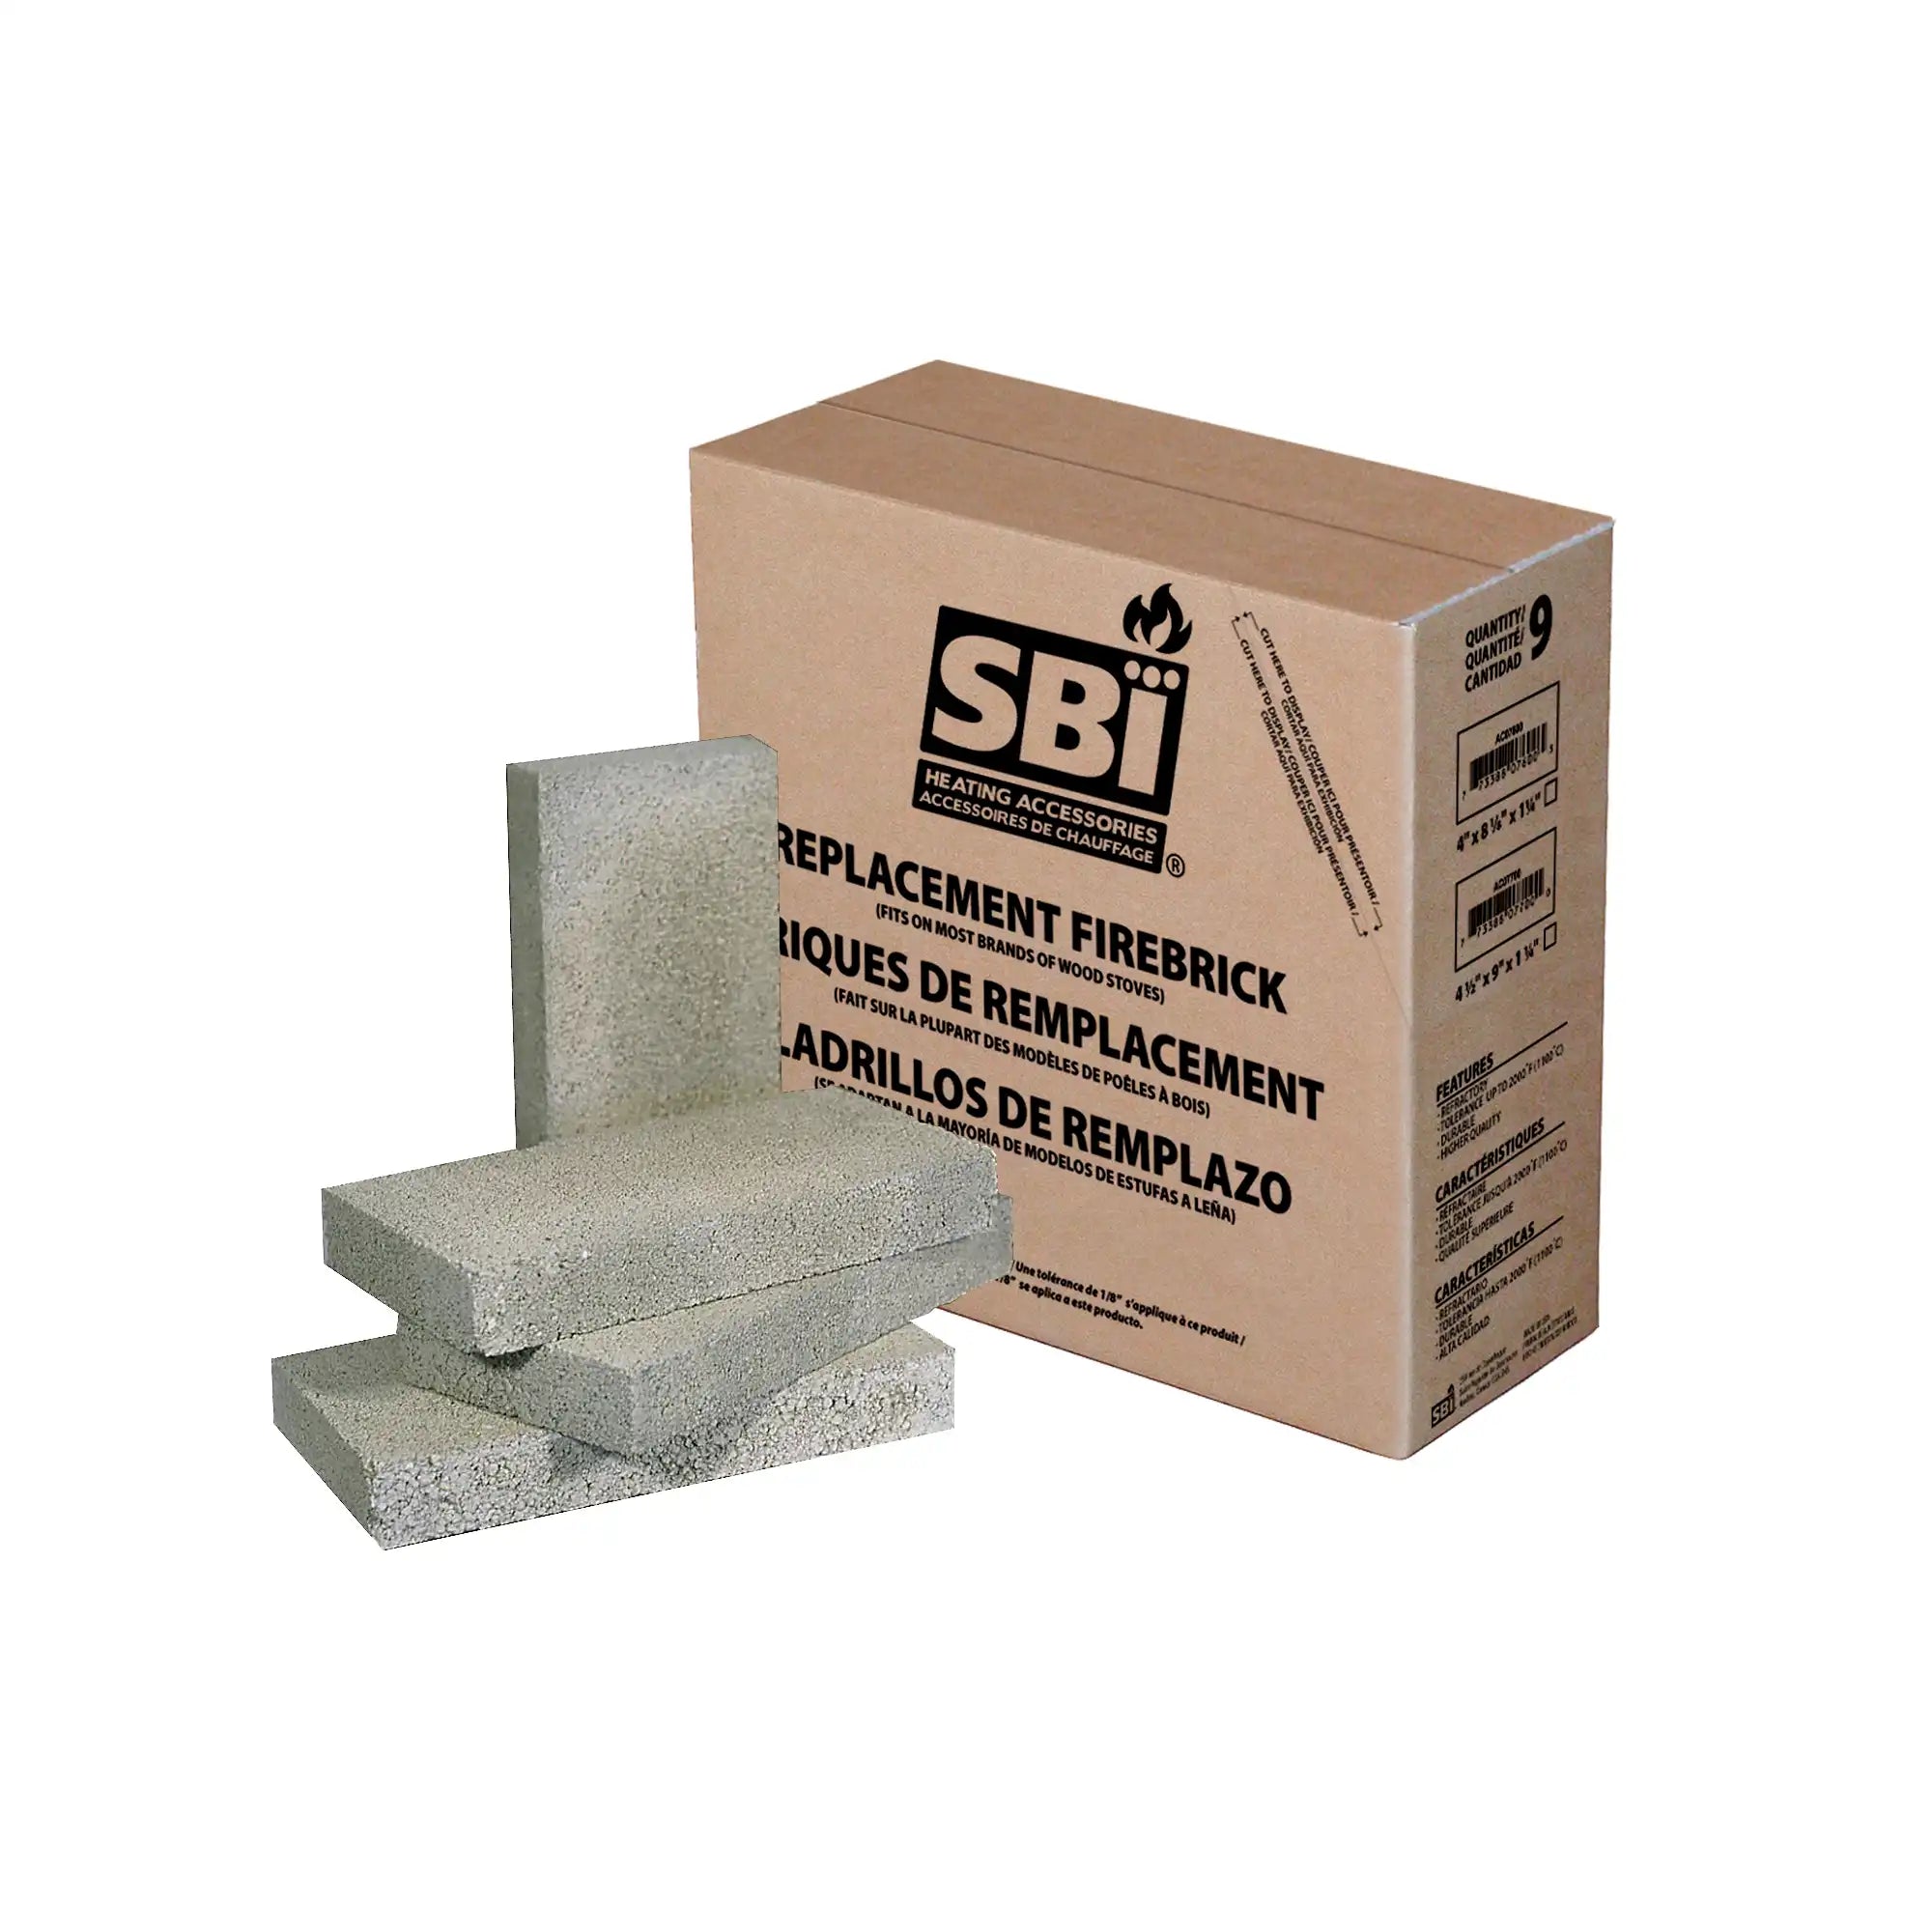 SBI 4" X 8" X 1 1/4" Refractory Brick (9 Units) AC07600B